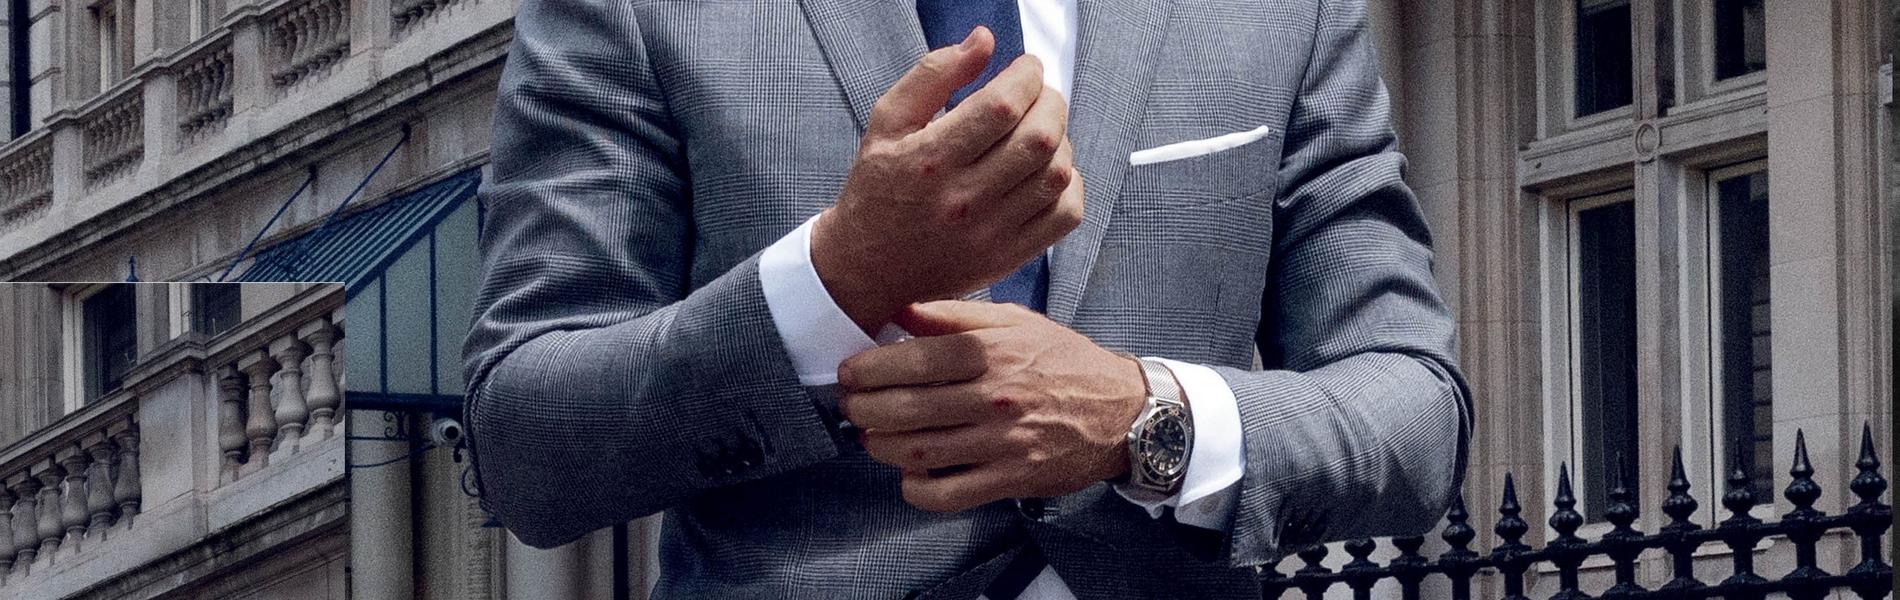 James Bond wearing OMEGA watch